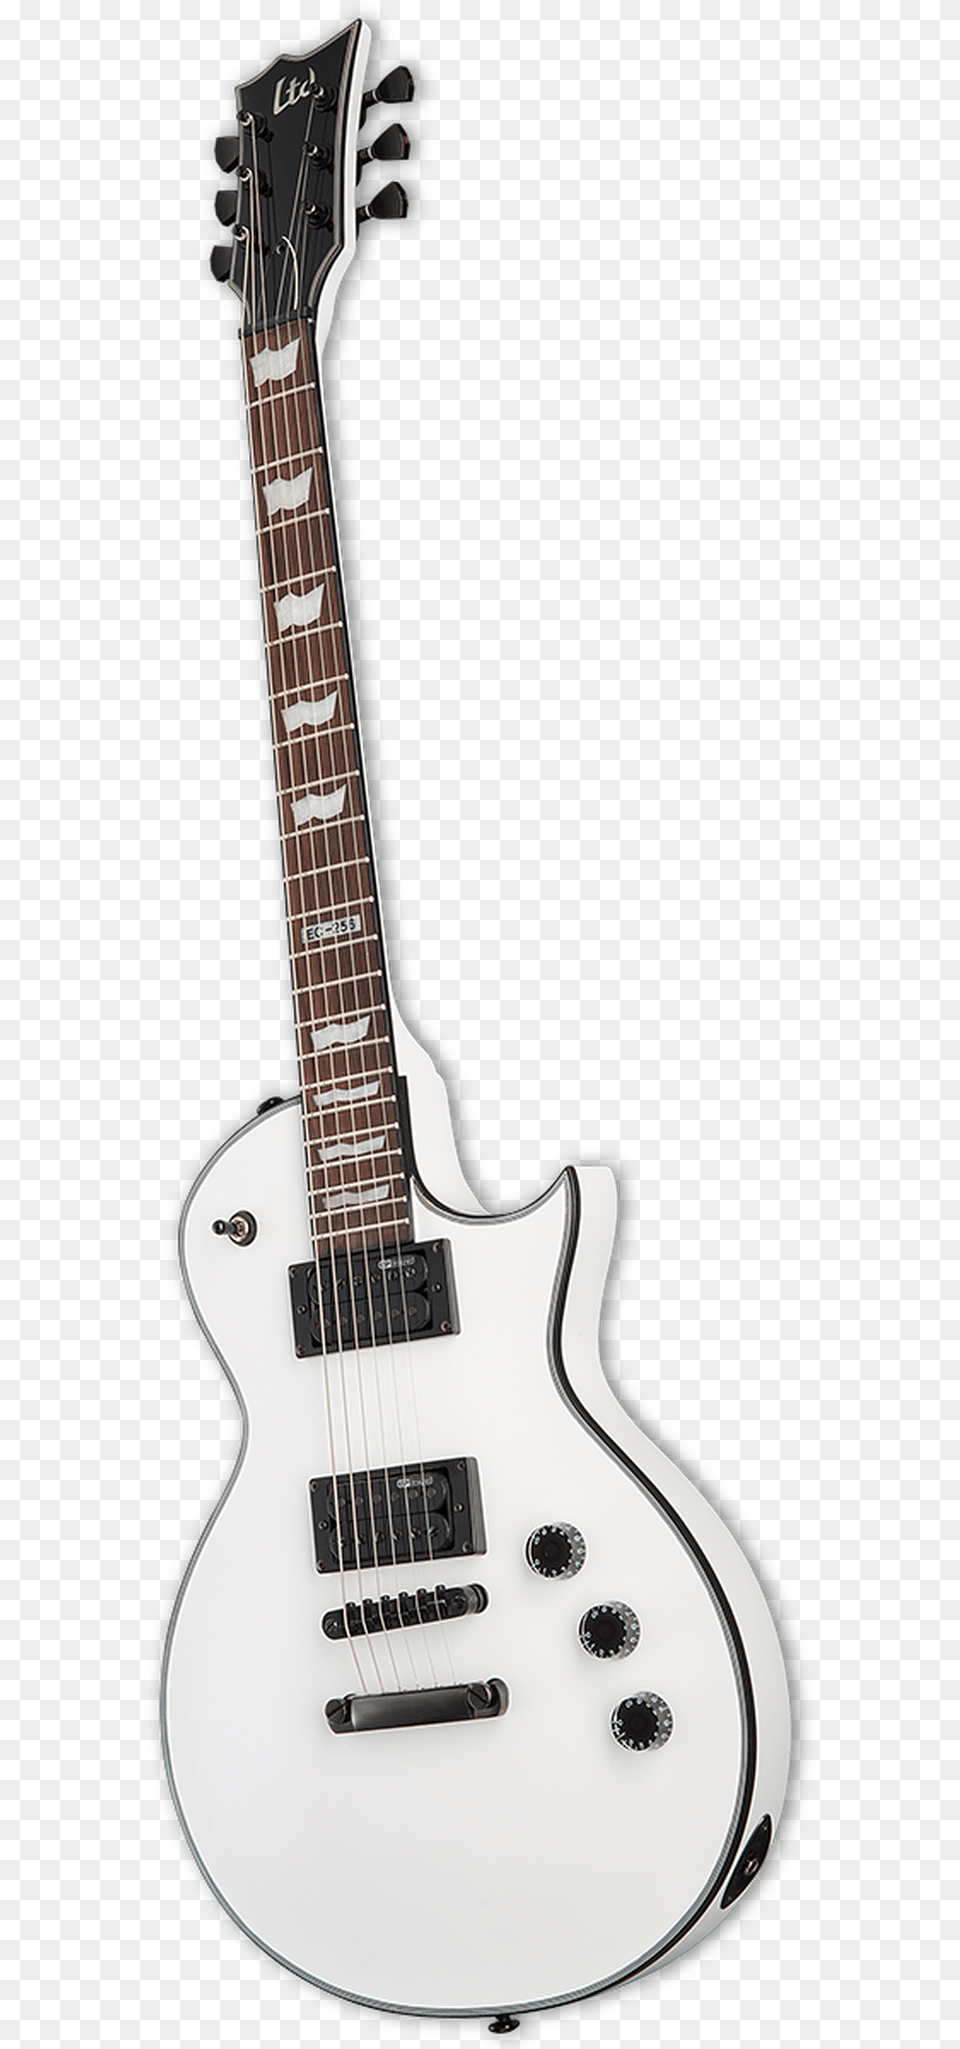 Esp Ltd Ec256 6 String Guitar Esp Ltd Ec, Bass Guitar, Musical Instrument, Electric Guitar Png Image